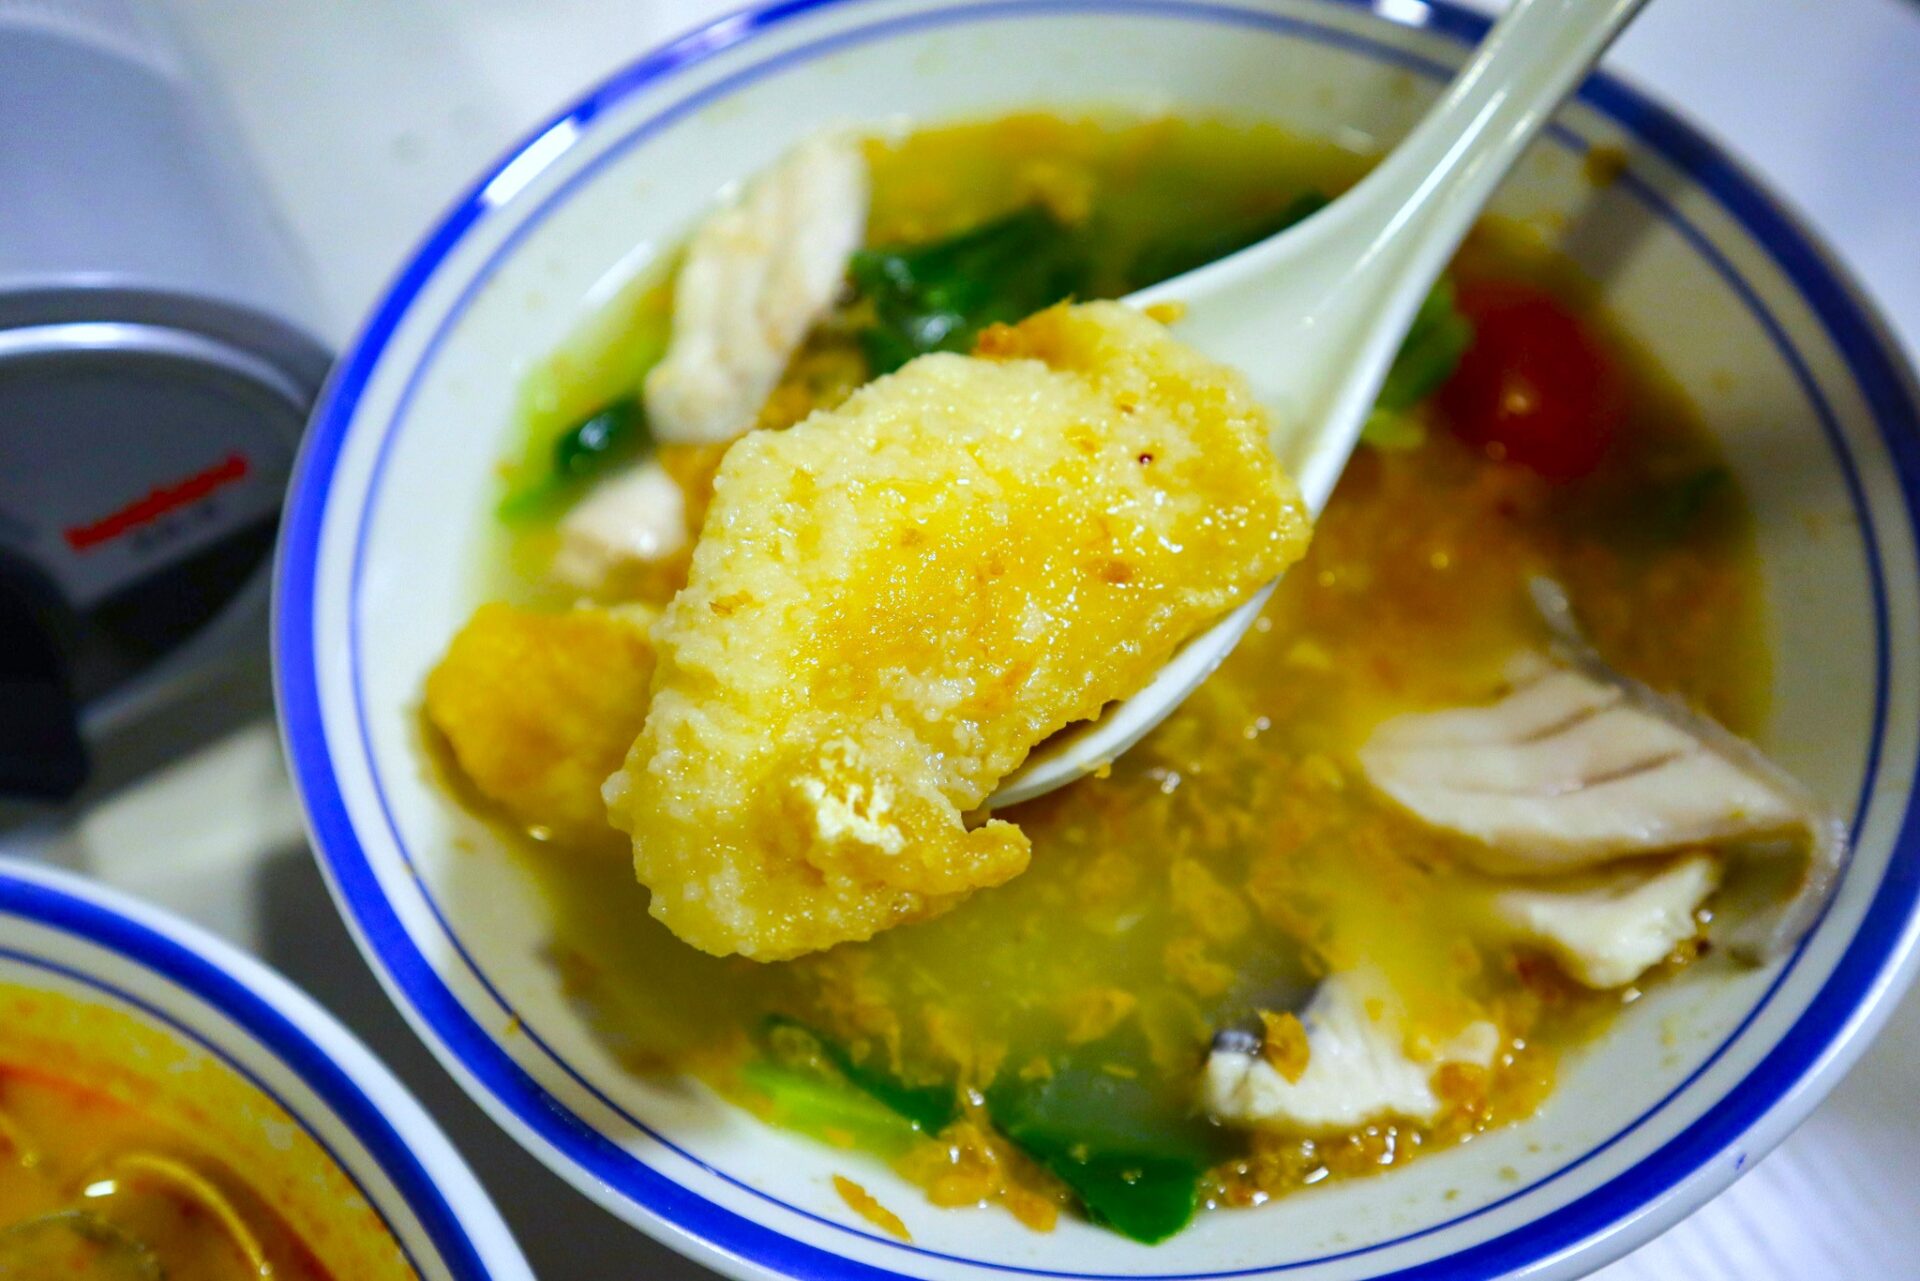 fish soup paradise - fried fish closeup